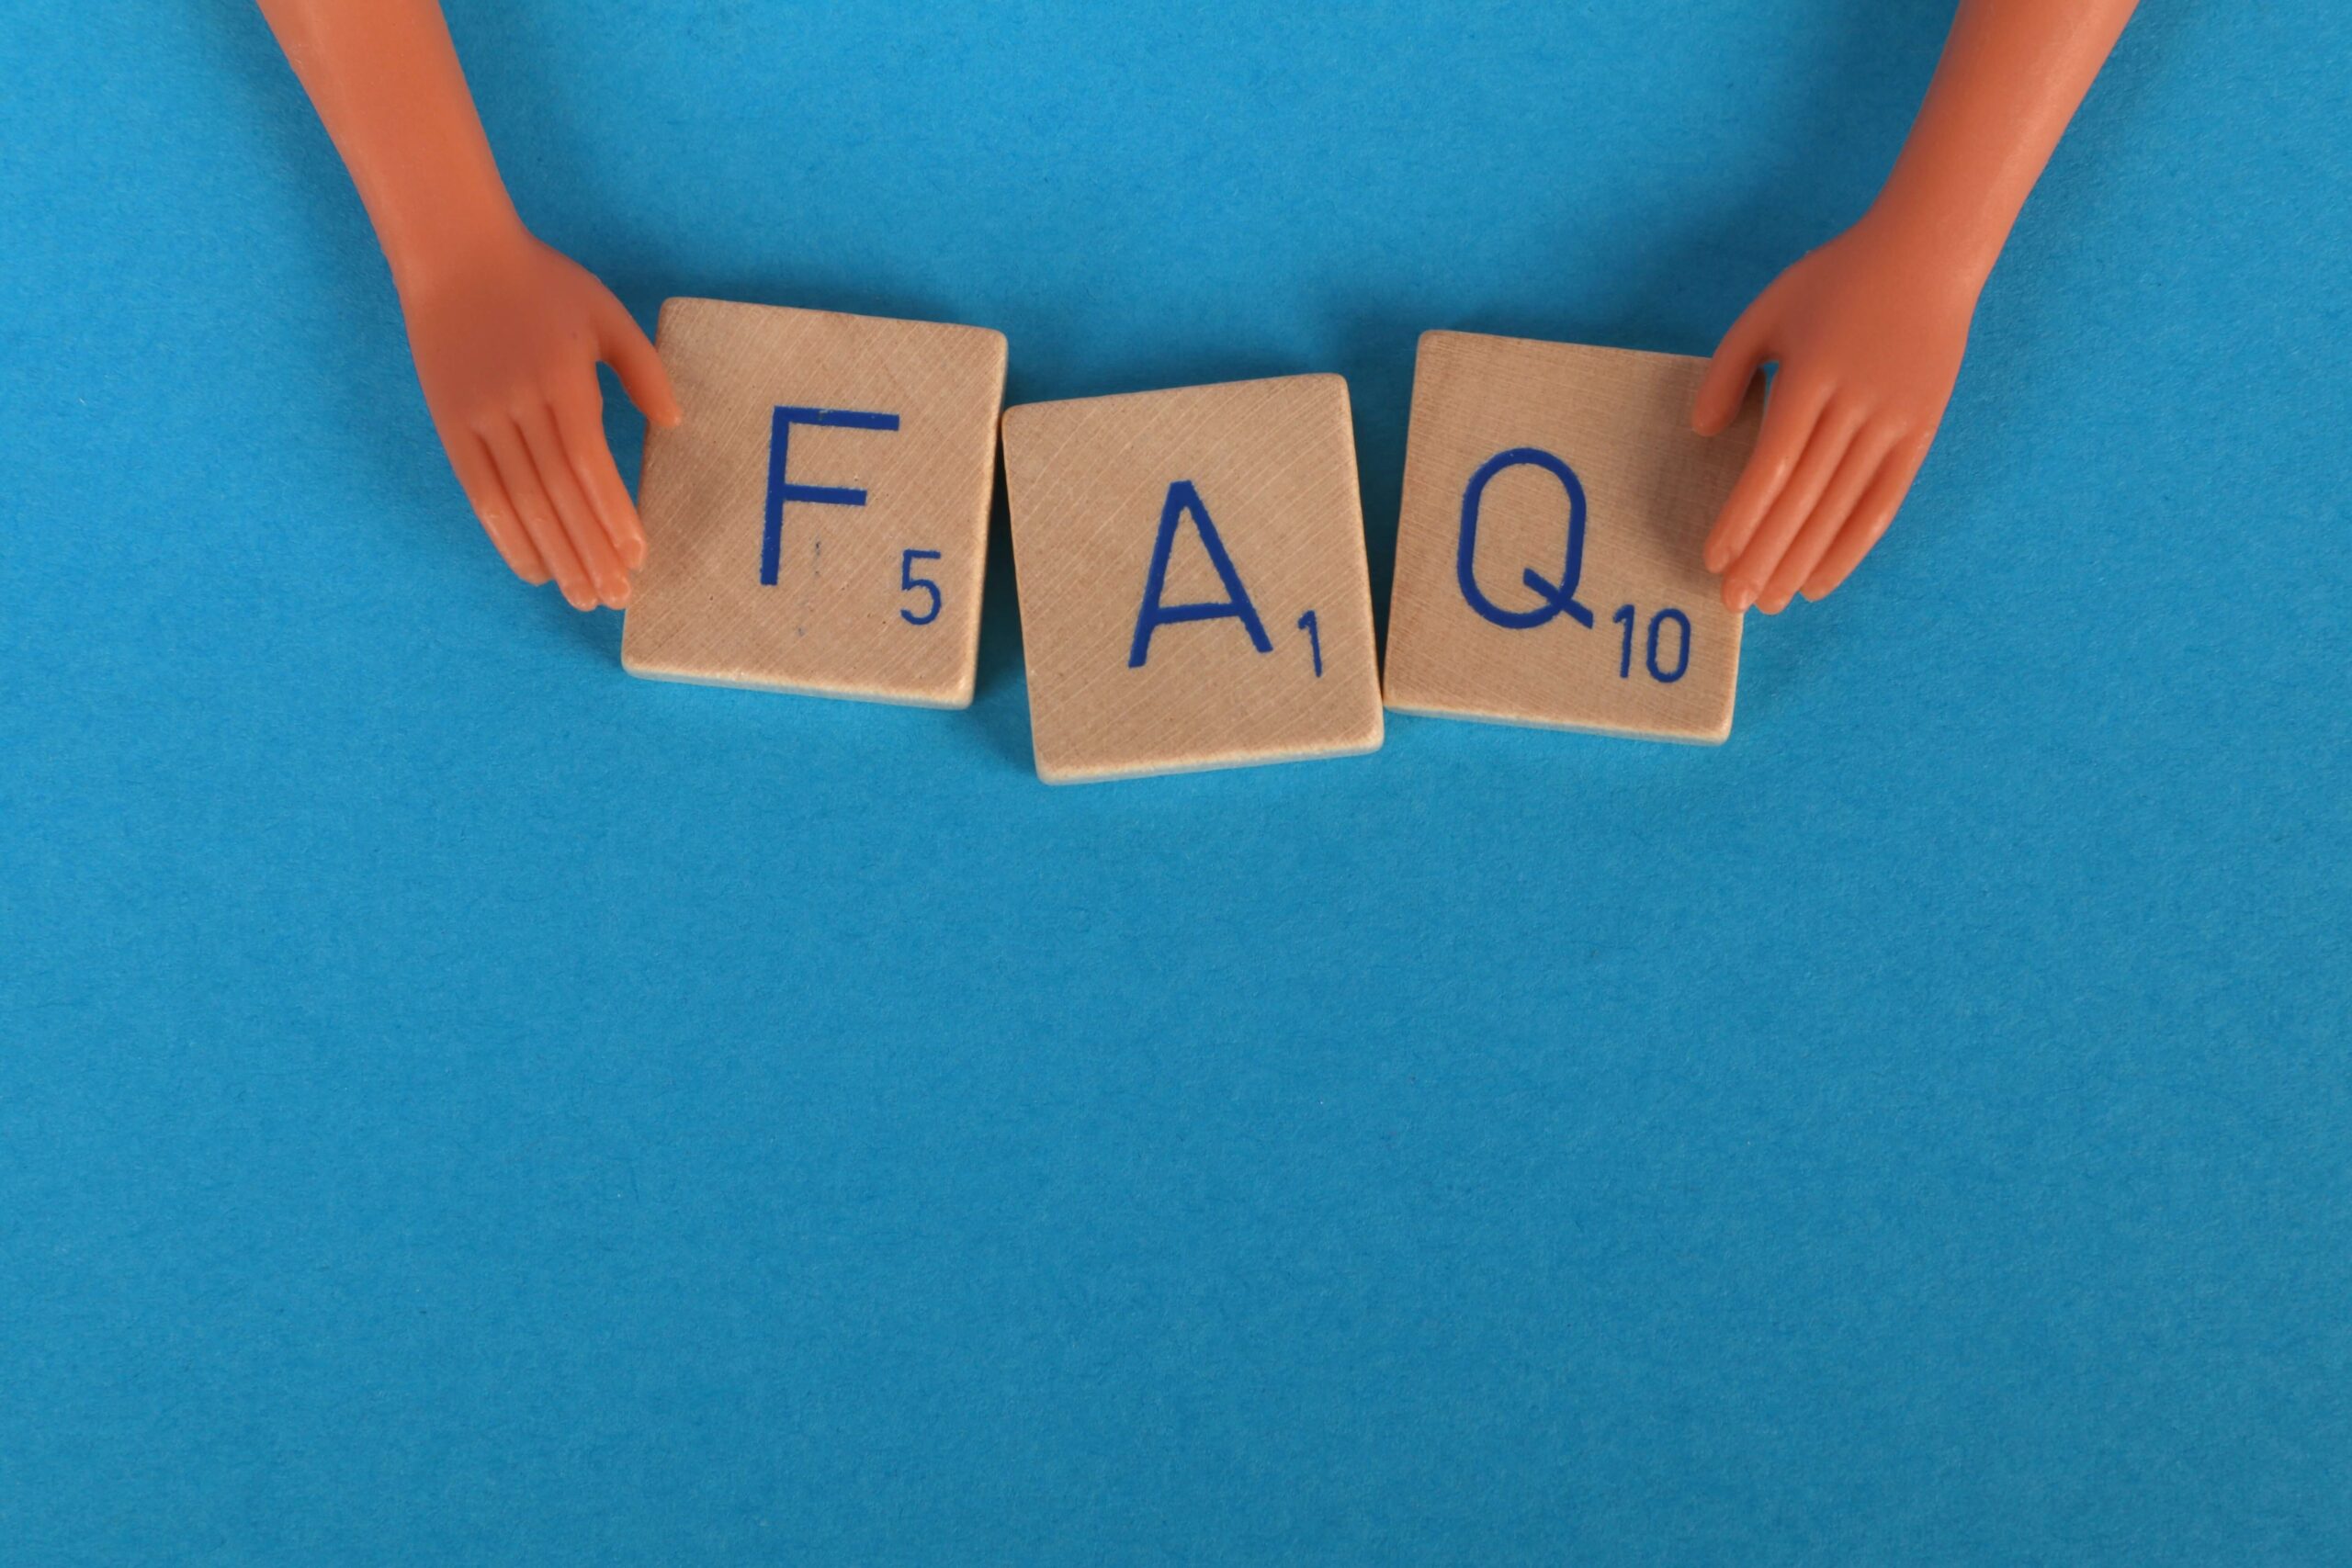 FAQ Scrabble tiles blue